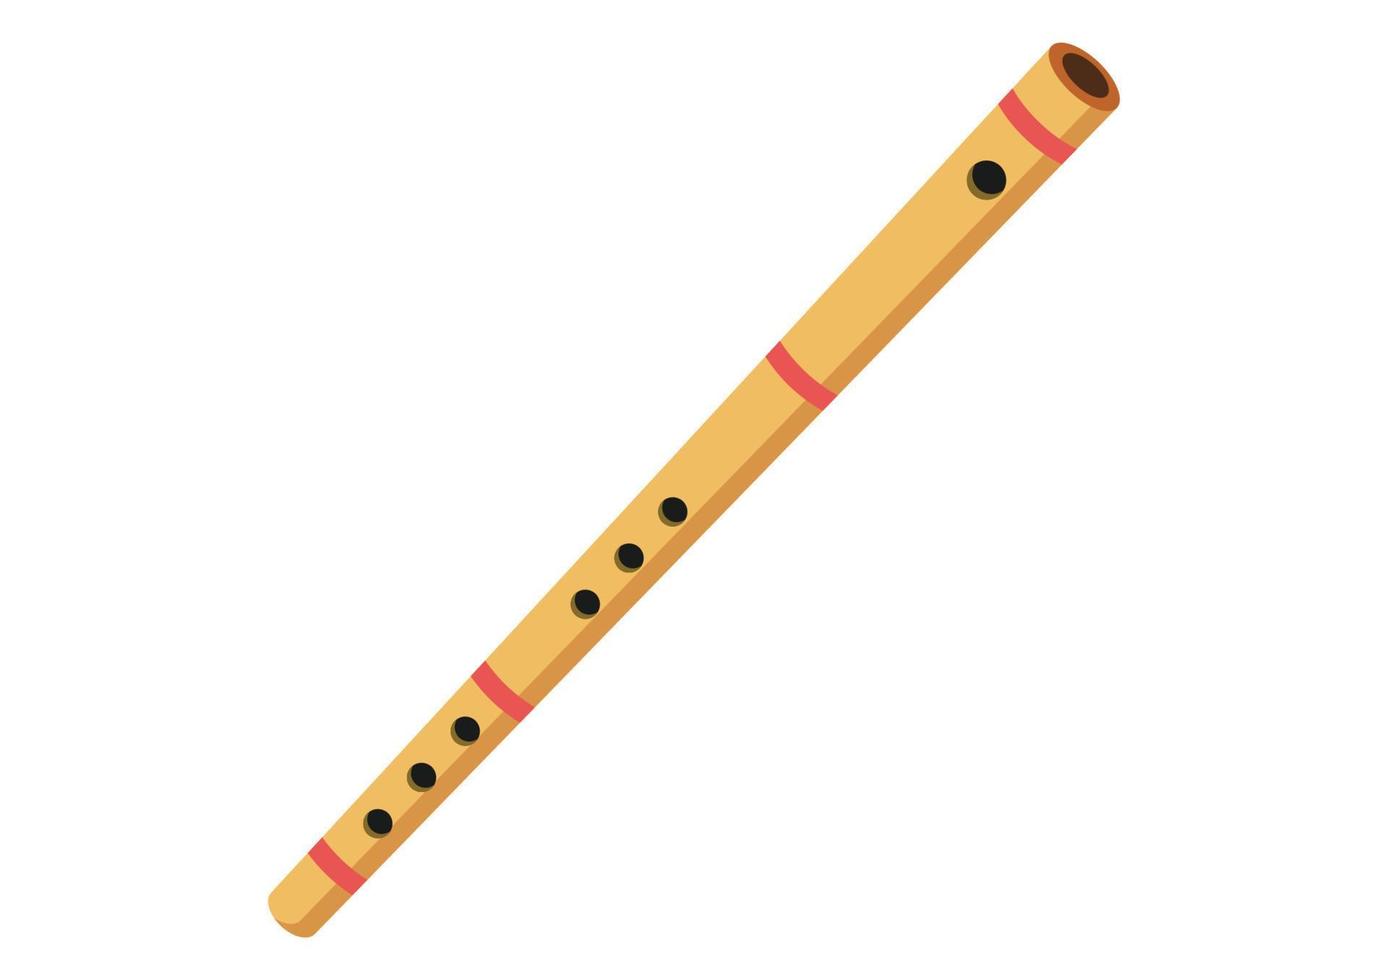 diseño vectorial de flauta de bambú. ilustración de vector de estilo plano de flauta de madera aislado sobre fondo blanco. concepto de instrumentos musicales clásicos antiguos. imágenes prediseñadas de flauta.